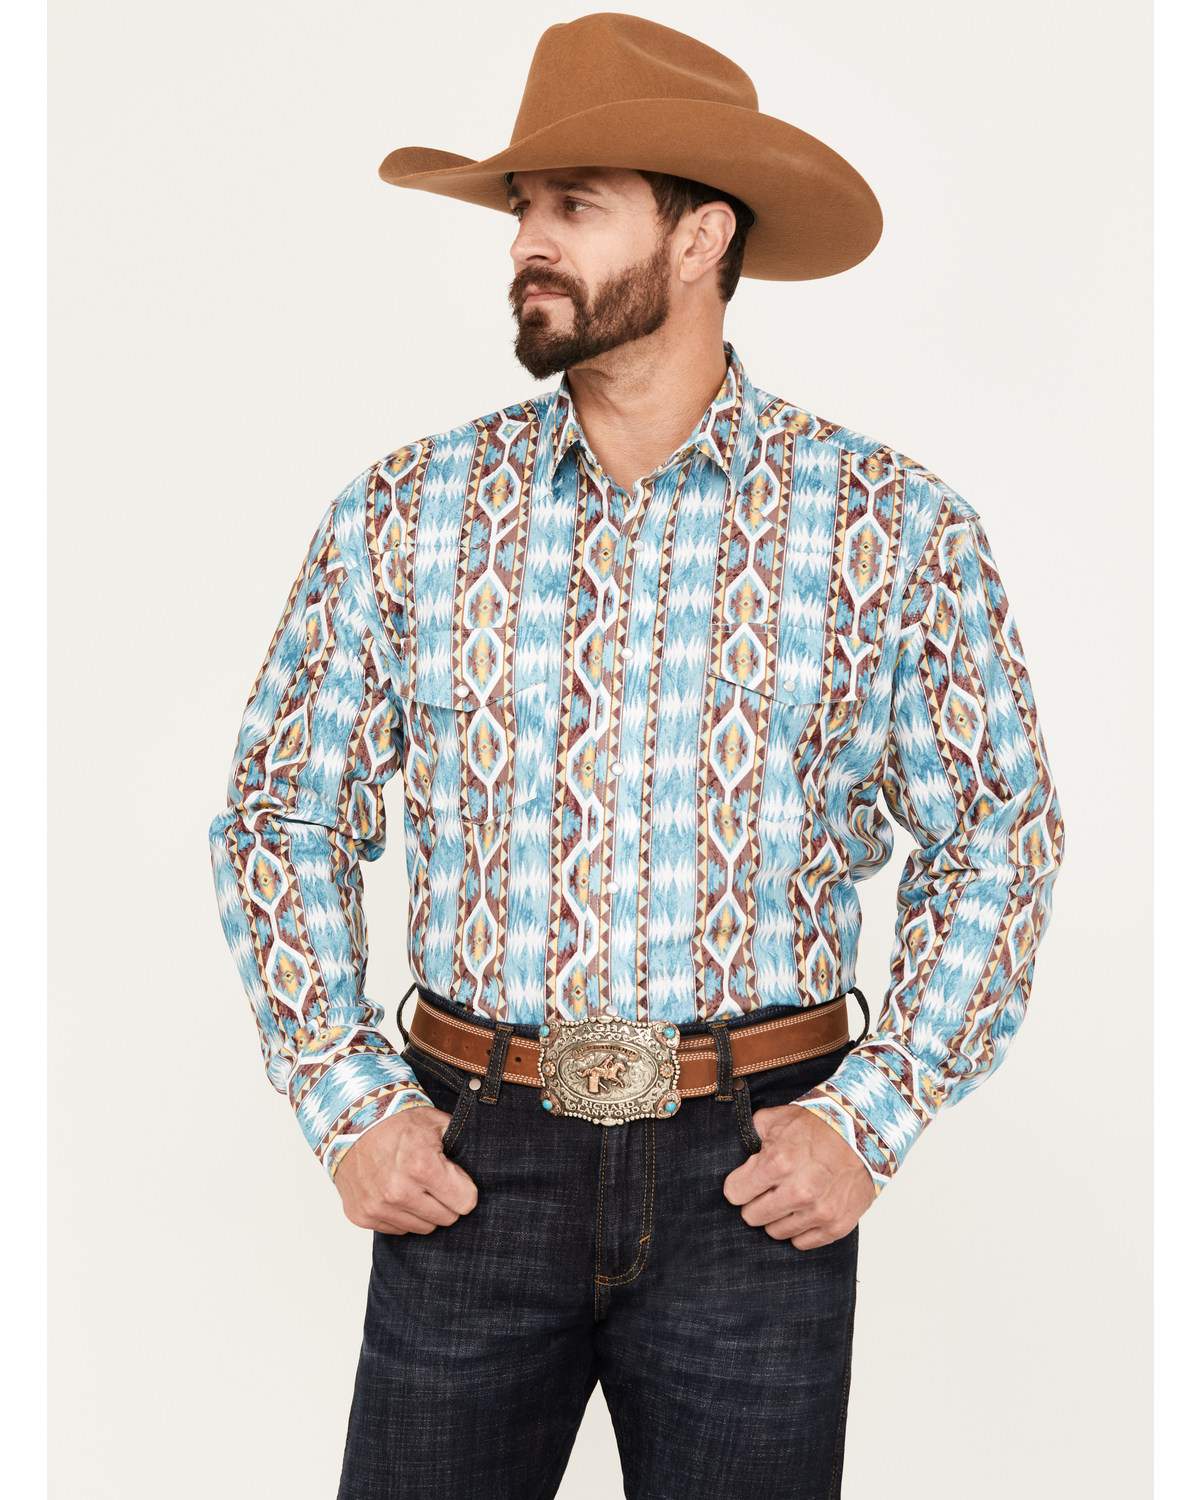 Wrangler Men's Southwestern Print Long Sleeve Pearl Snap Western Shirt